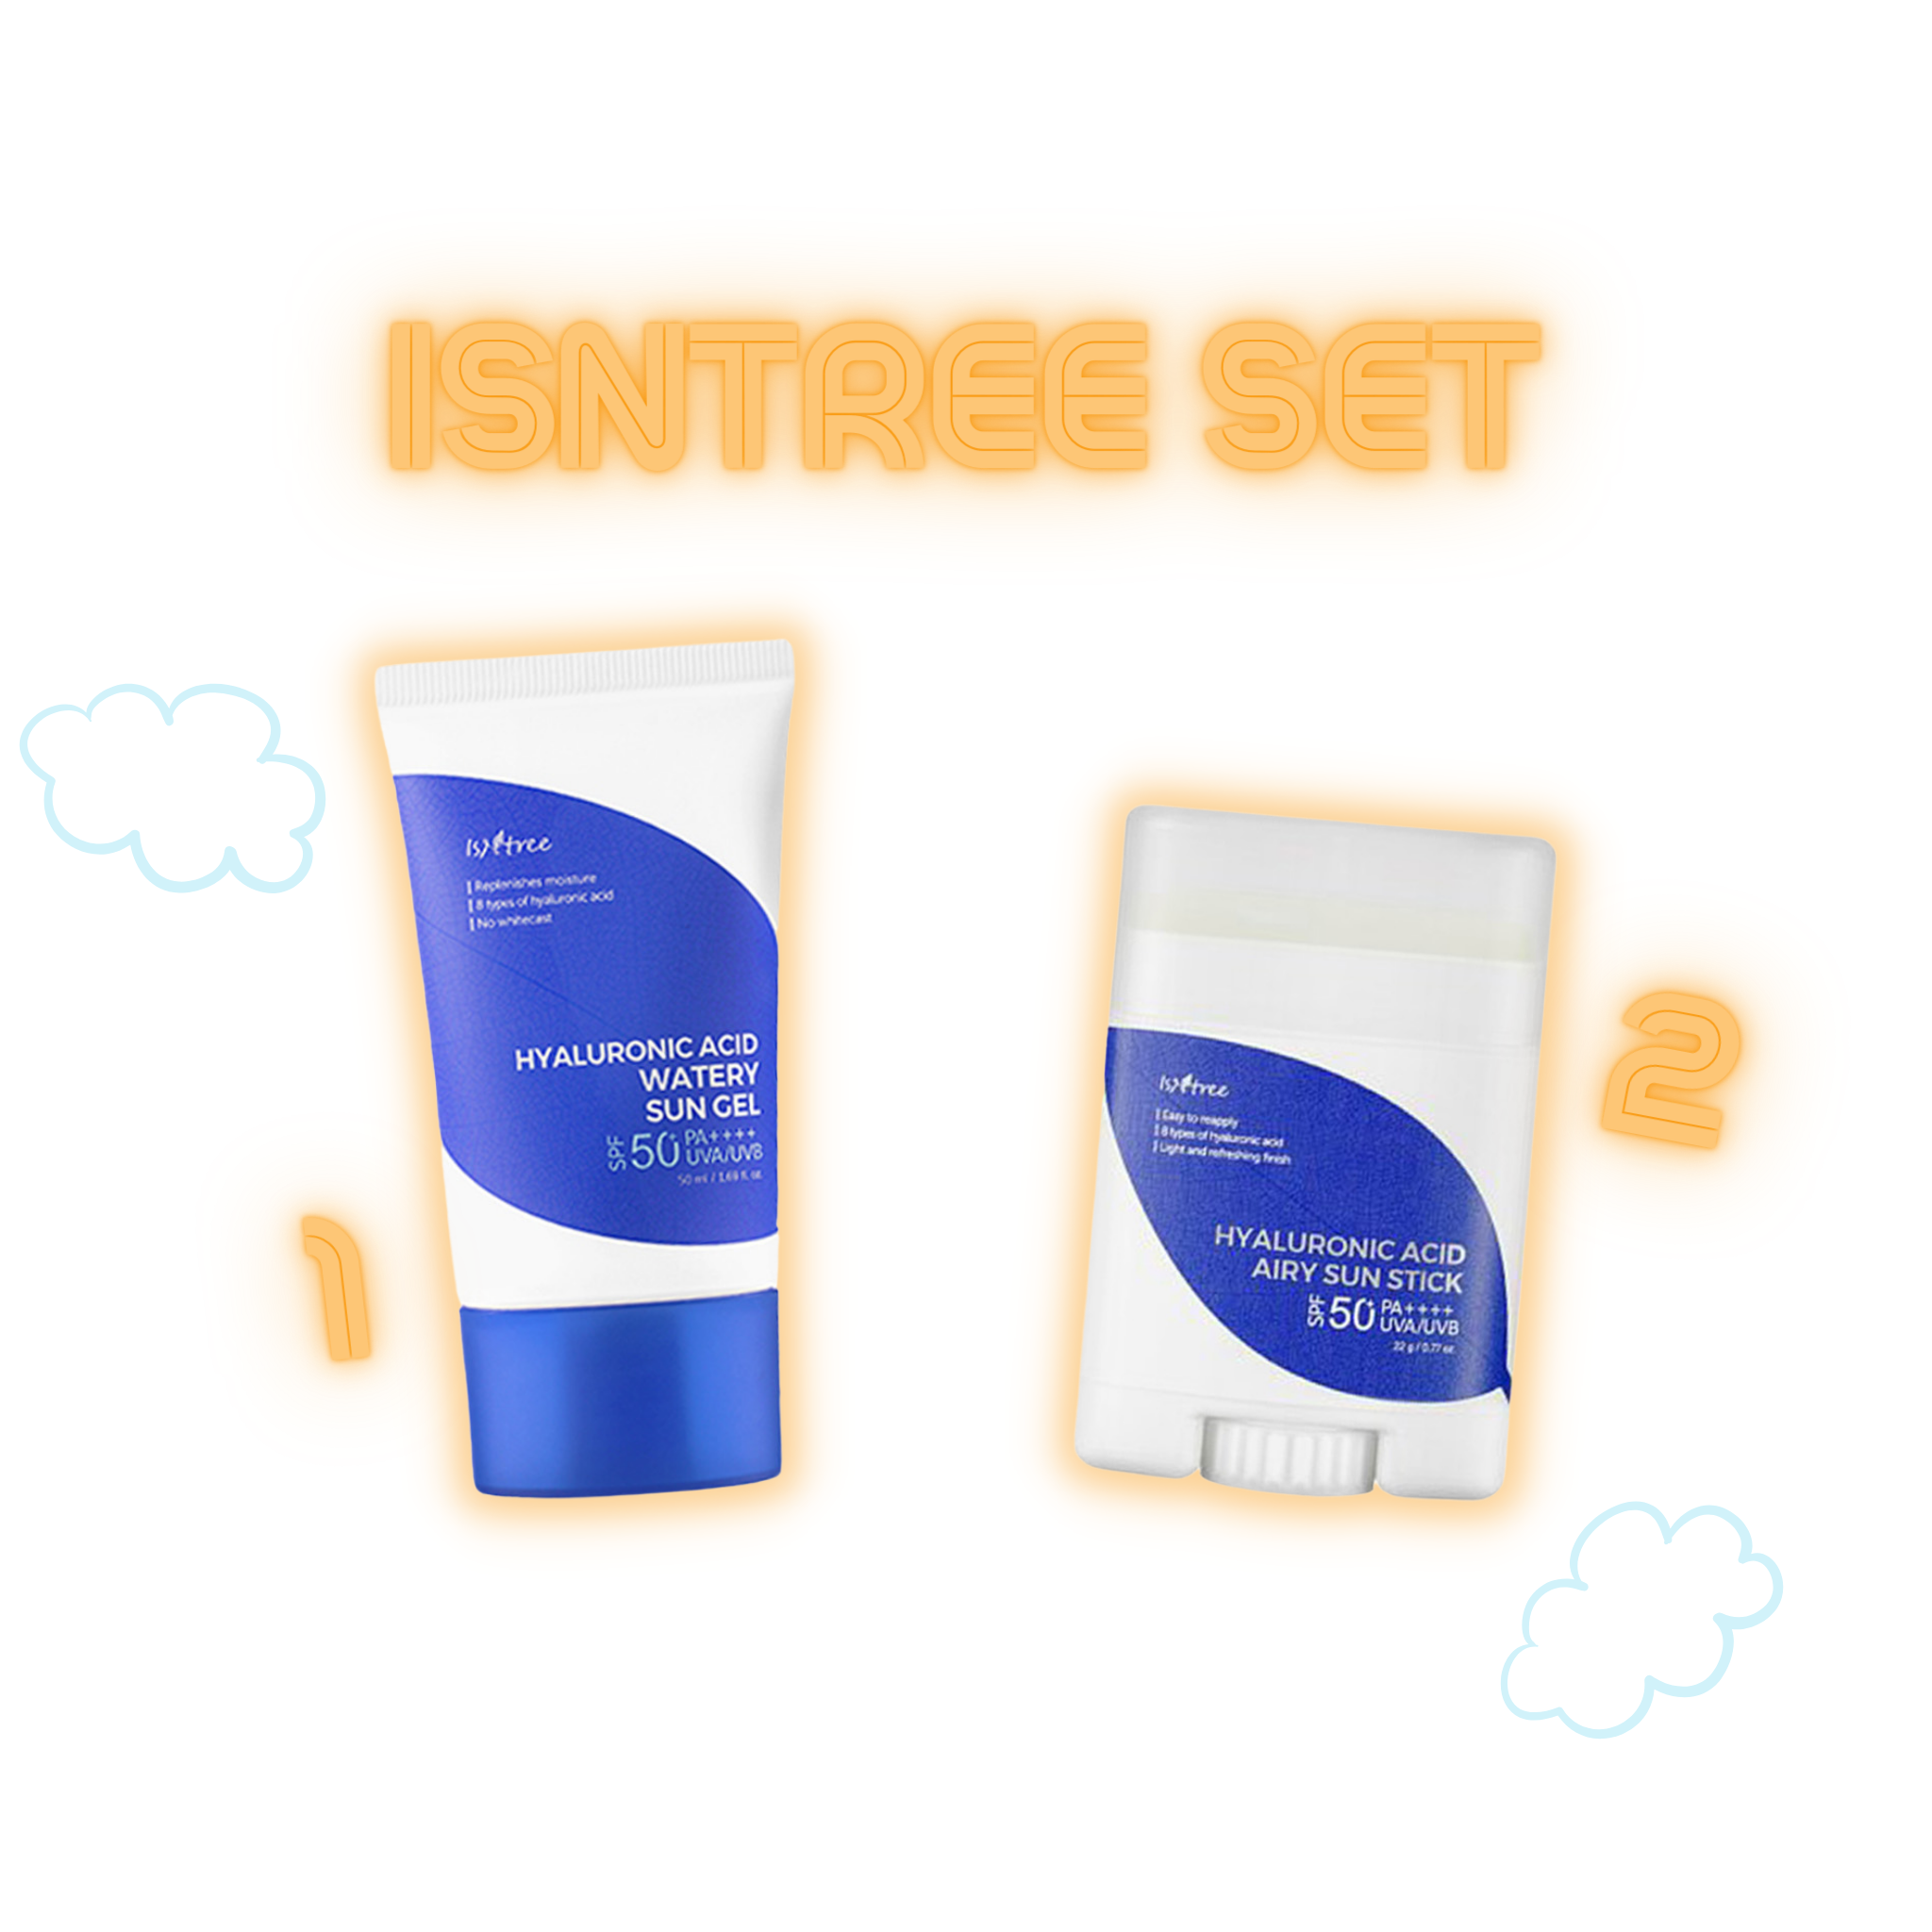 Isntree Sunscreen Set (2PC)